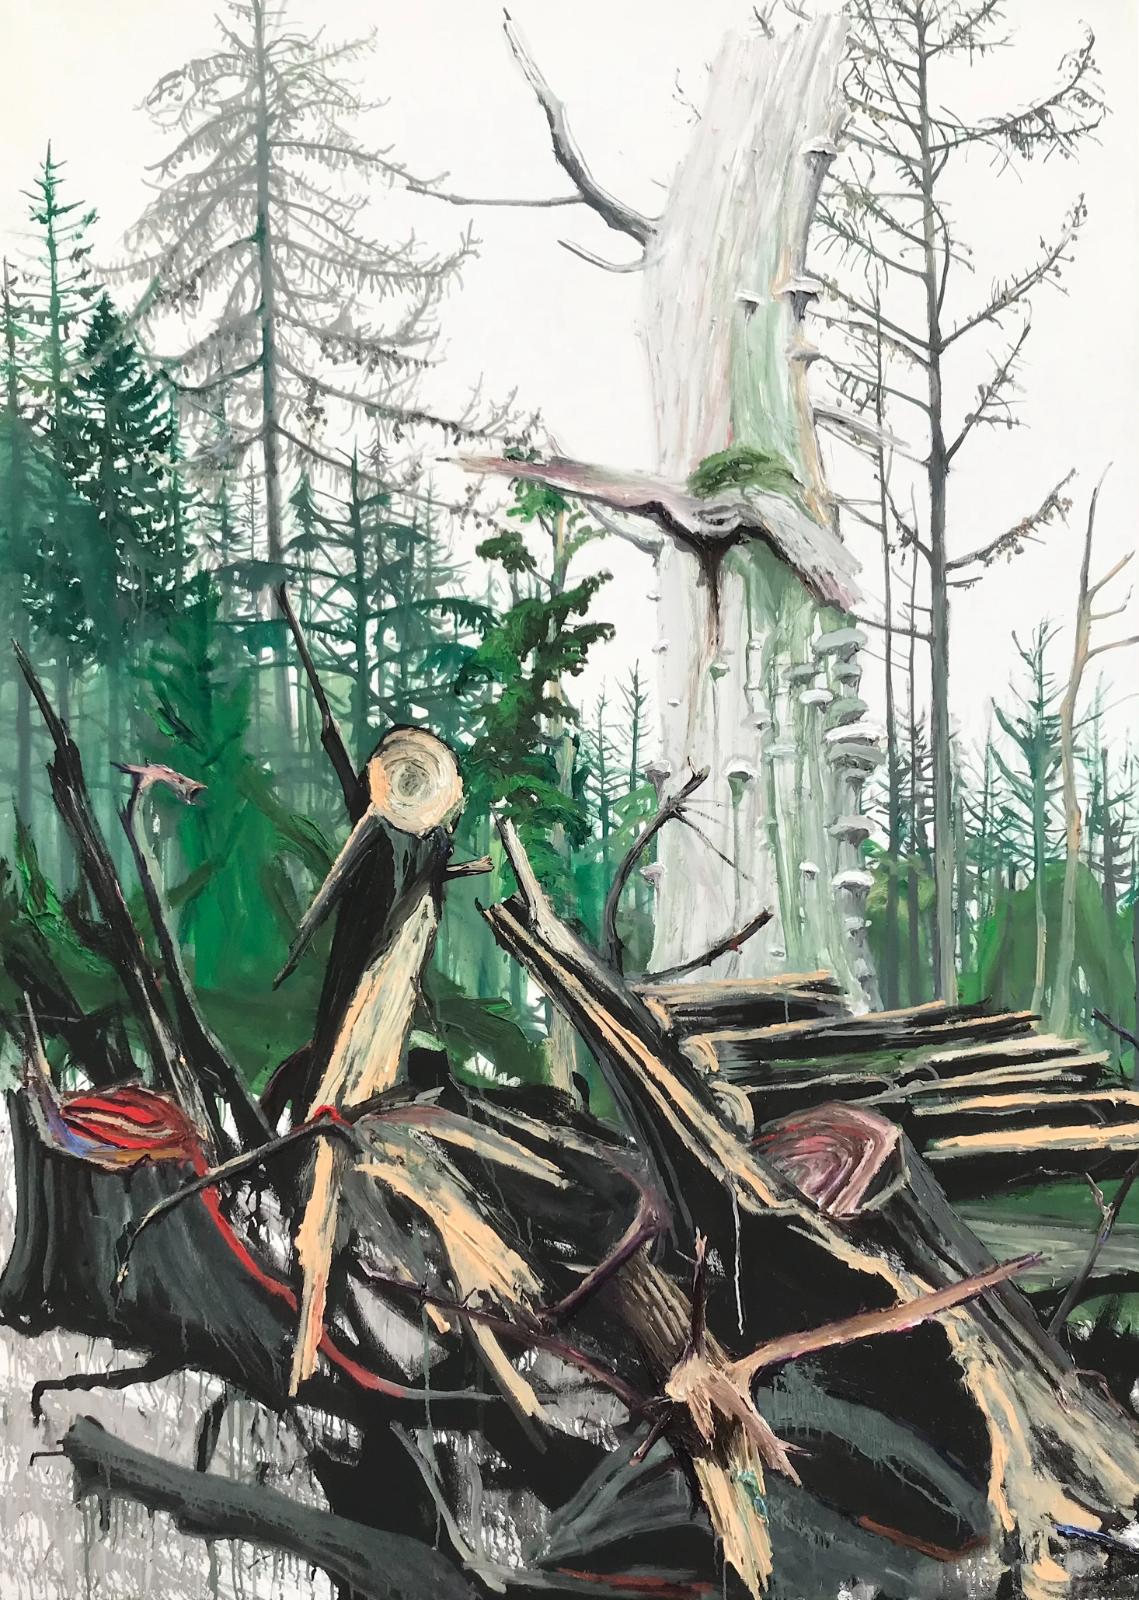 Helge Hommes, Nr. 3 Baumportrait, RHW ..., 2019, Öl auf Leinwand, 250 x 180 cm